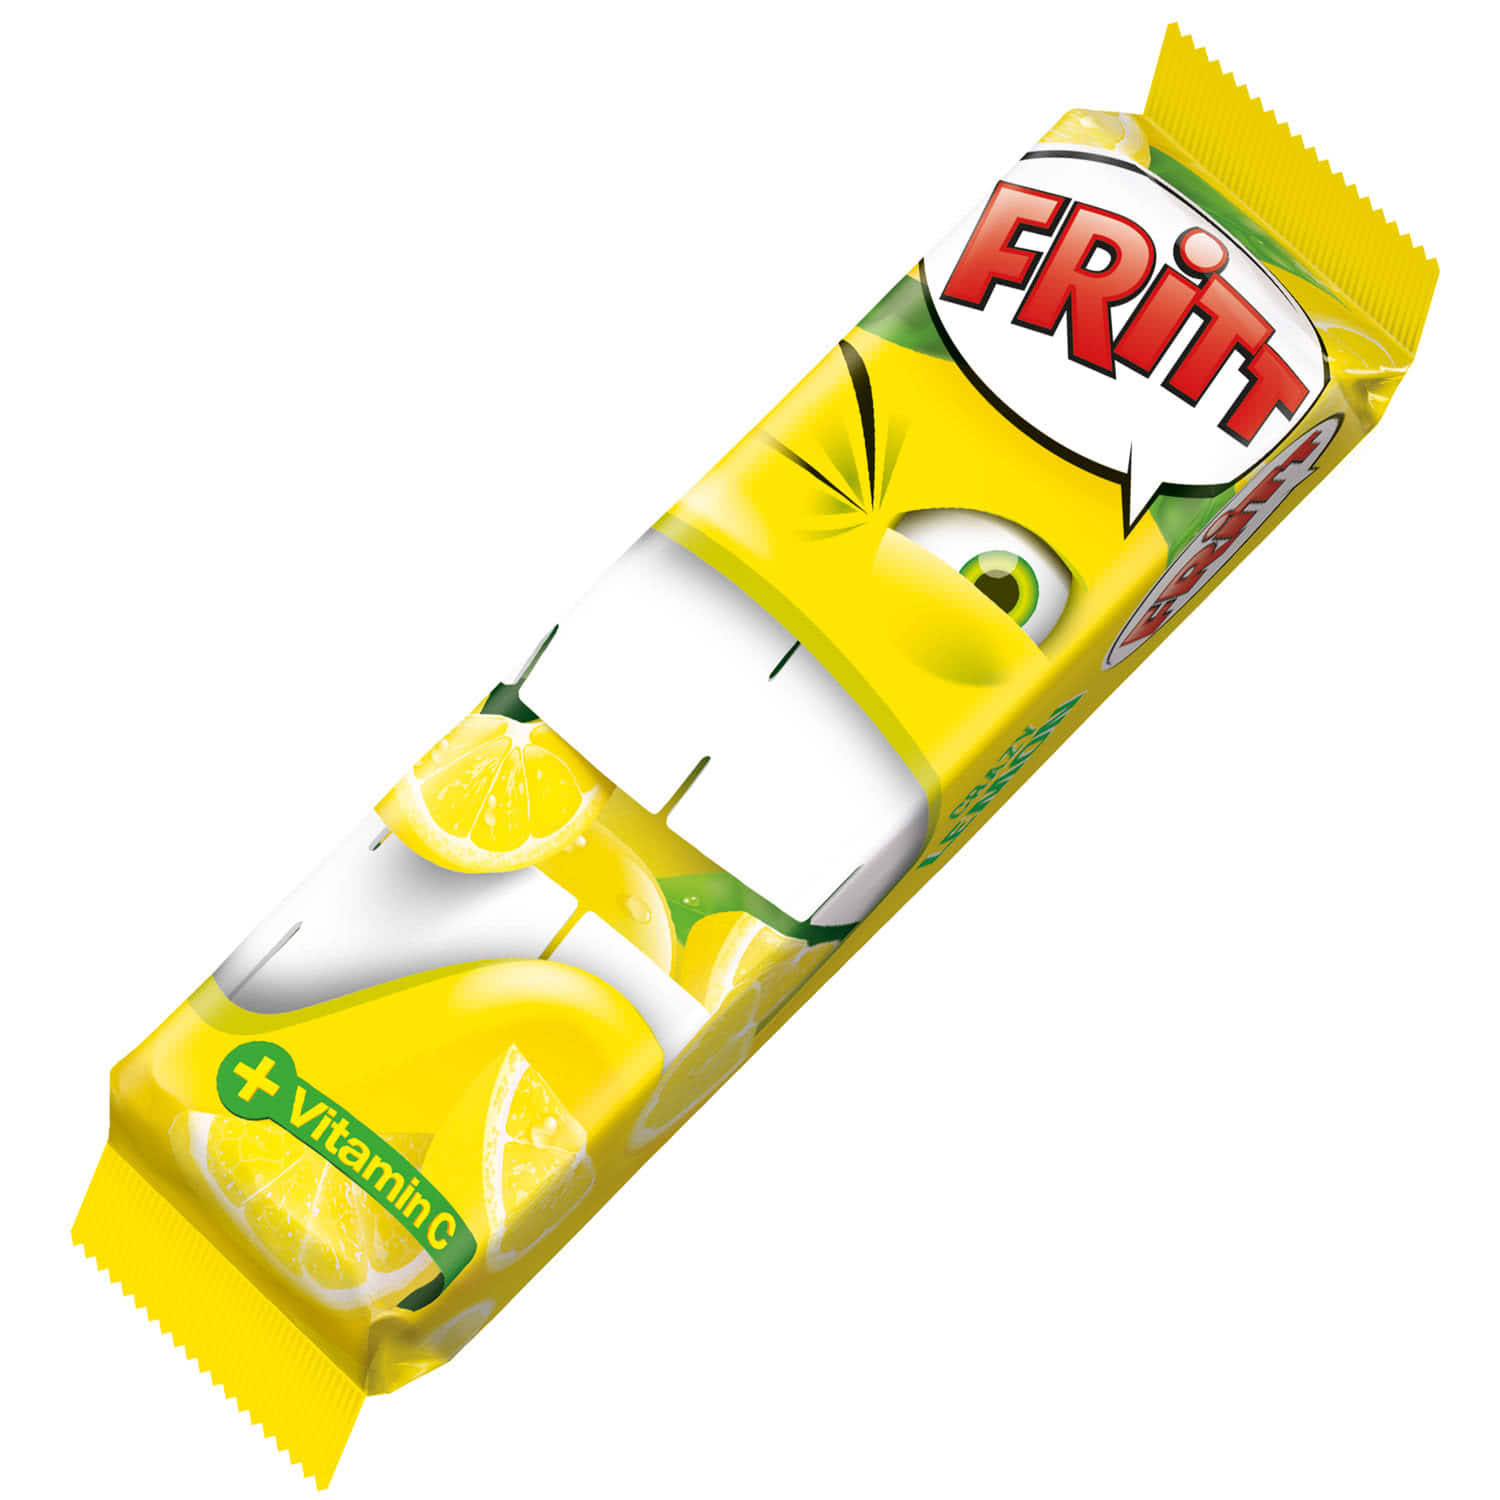 Fritt Lemon Chewy Candy Sticks - Lemon, 6pk